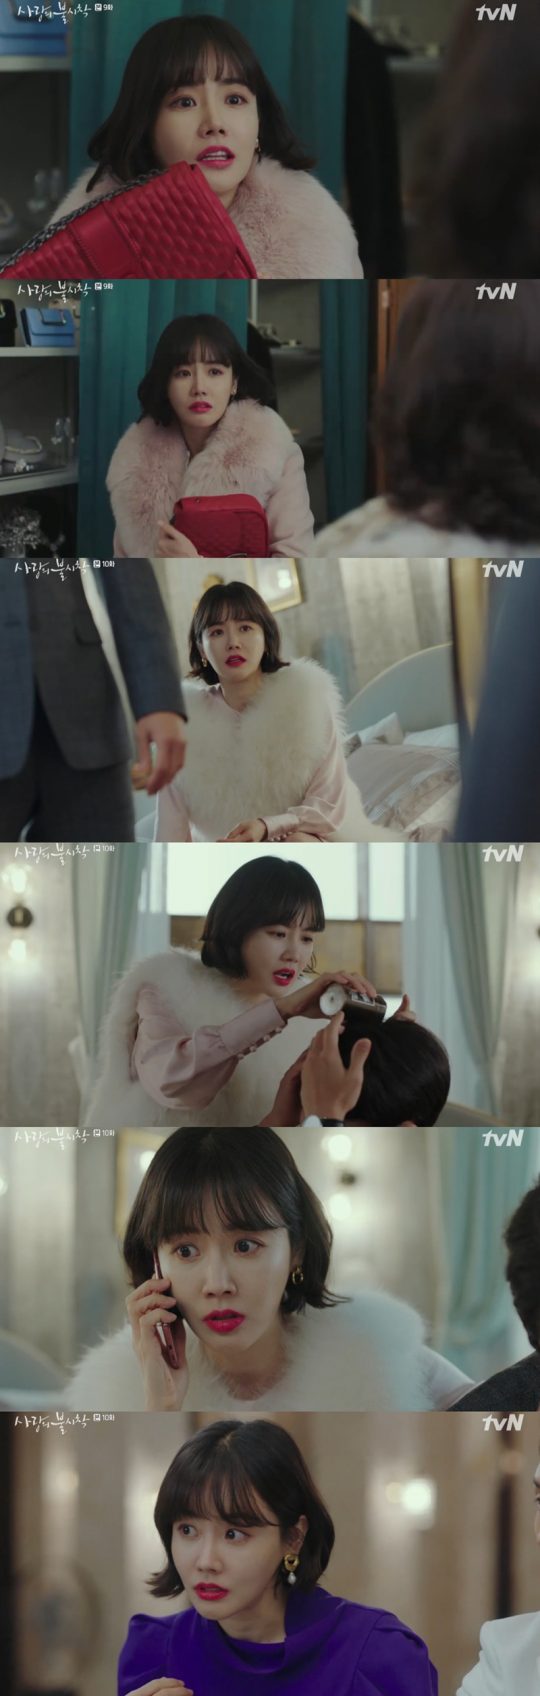 tvN 토일드라마 ‘사랑의 불시착’ 방송화면. /사진제공=tvN